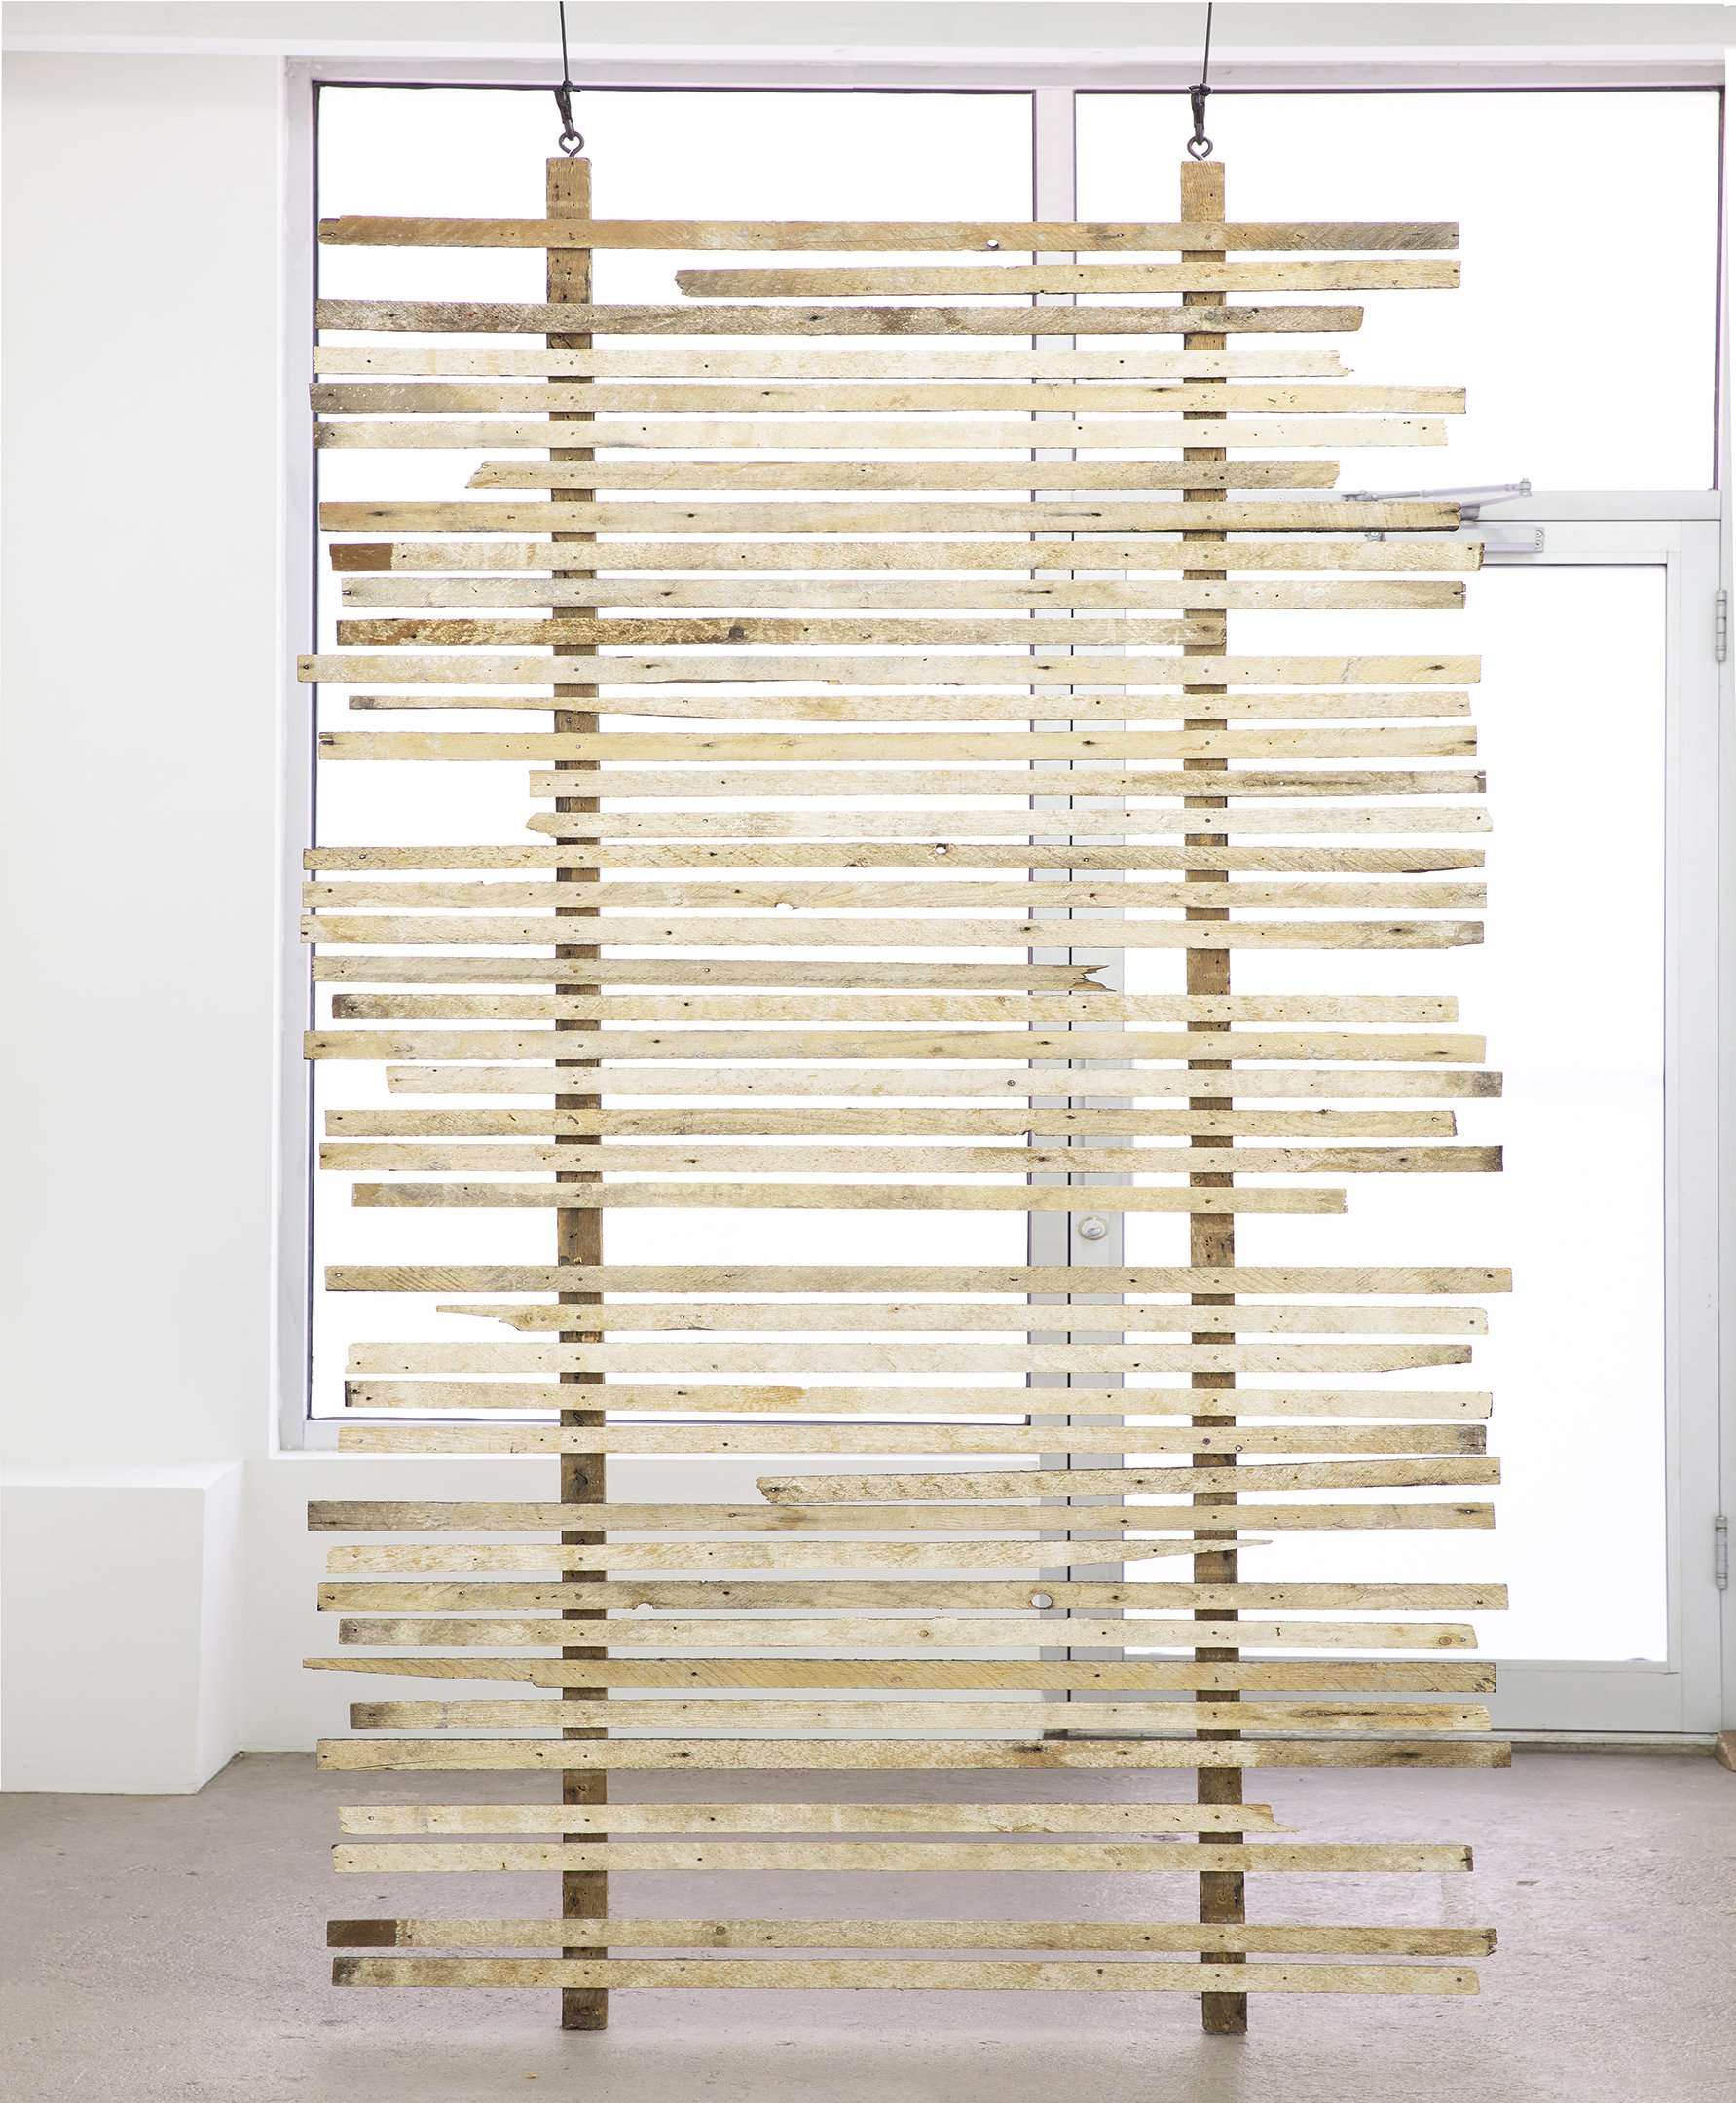  Jonathan Mildenberg  Rot-Body Hymn , 2022 wood lath, studs, paint, furniture tacks  94 x 48 x 1.5 inches (239 x 122 x 4 cm)  JM13 